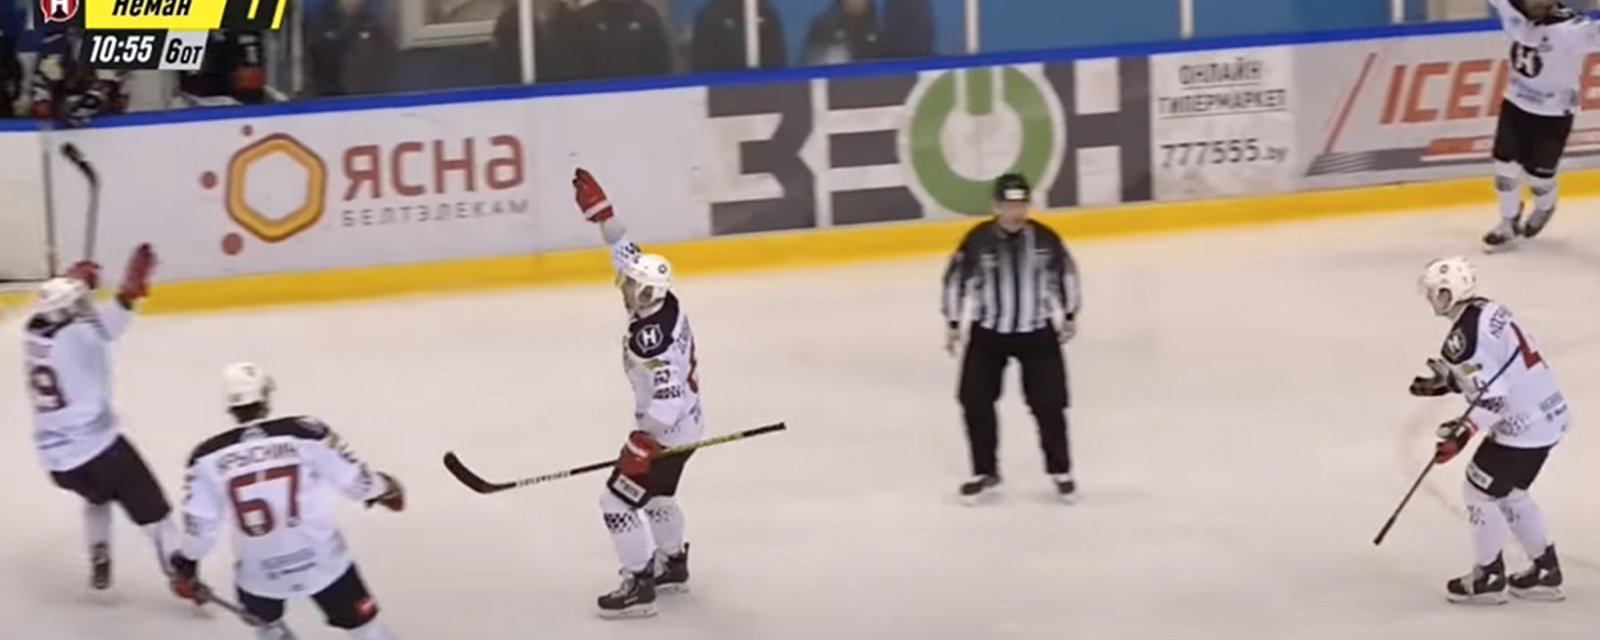 Belarusian teams play 9 periods in third-longest hockey game ever